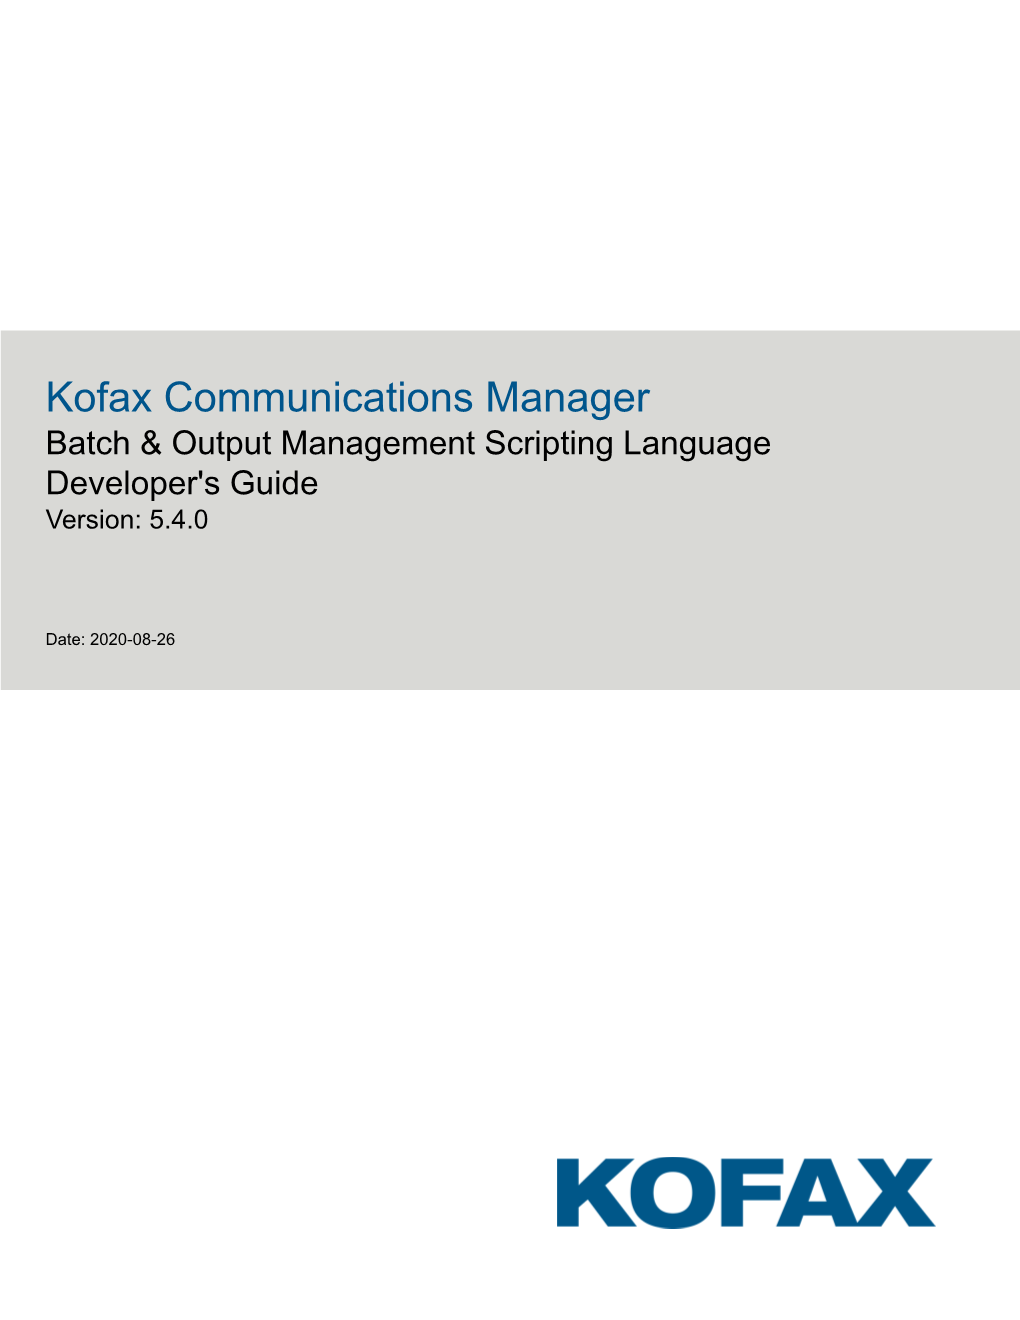 Kofax Communications Manager Batch & Output Management Scripting Language Developer's Guide